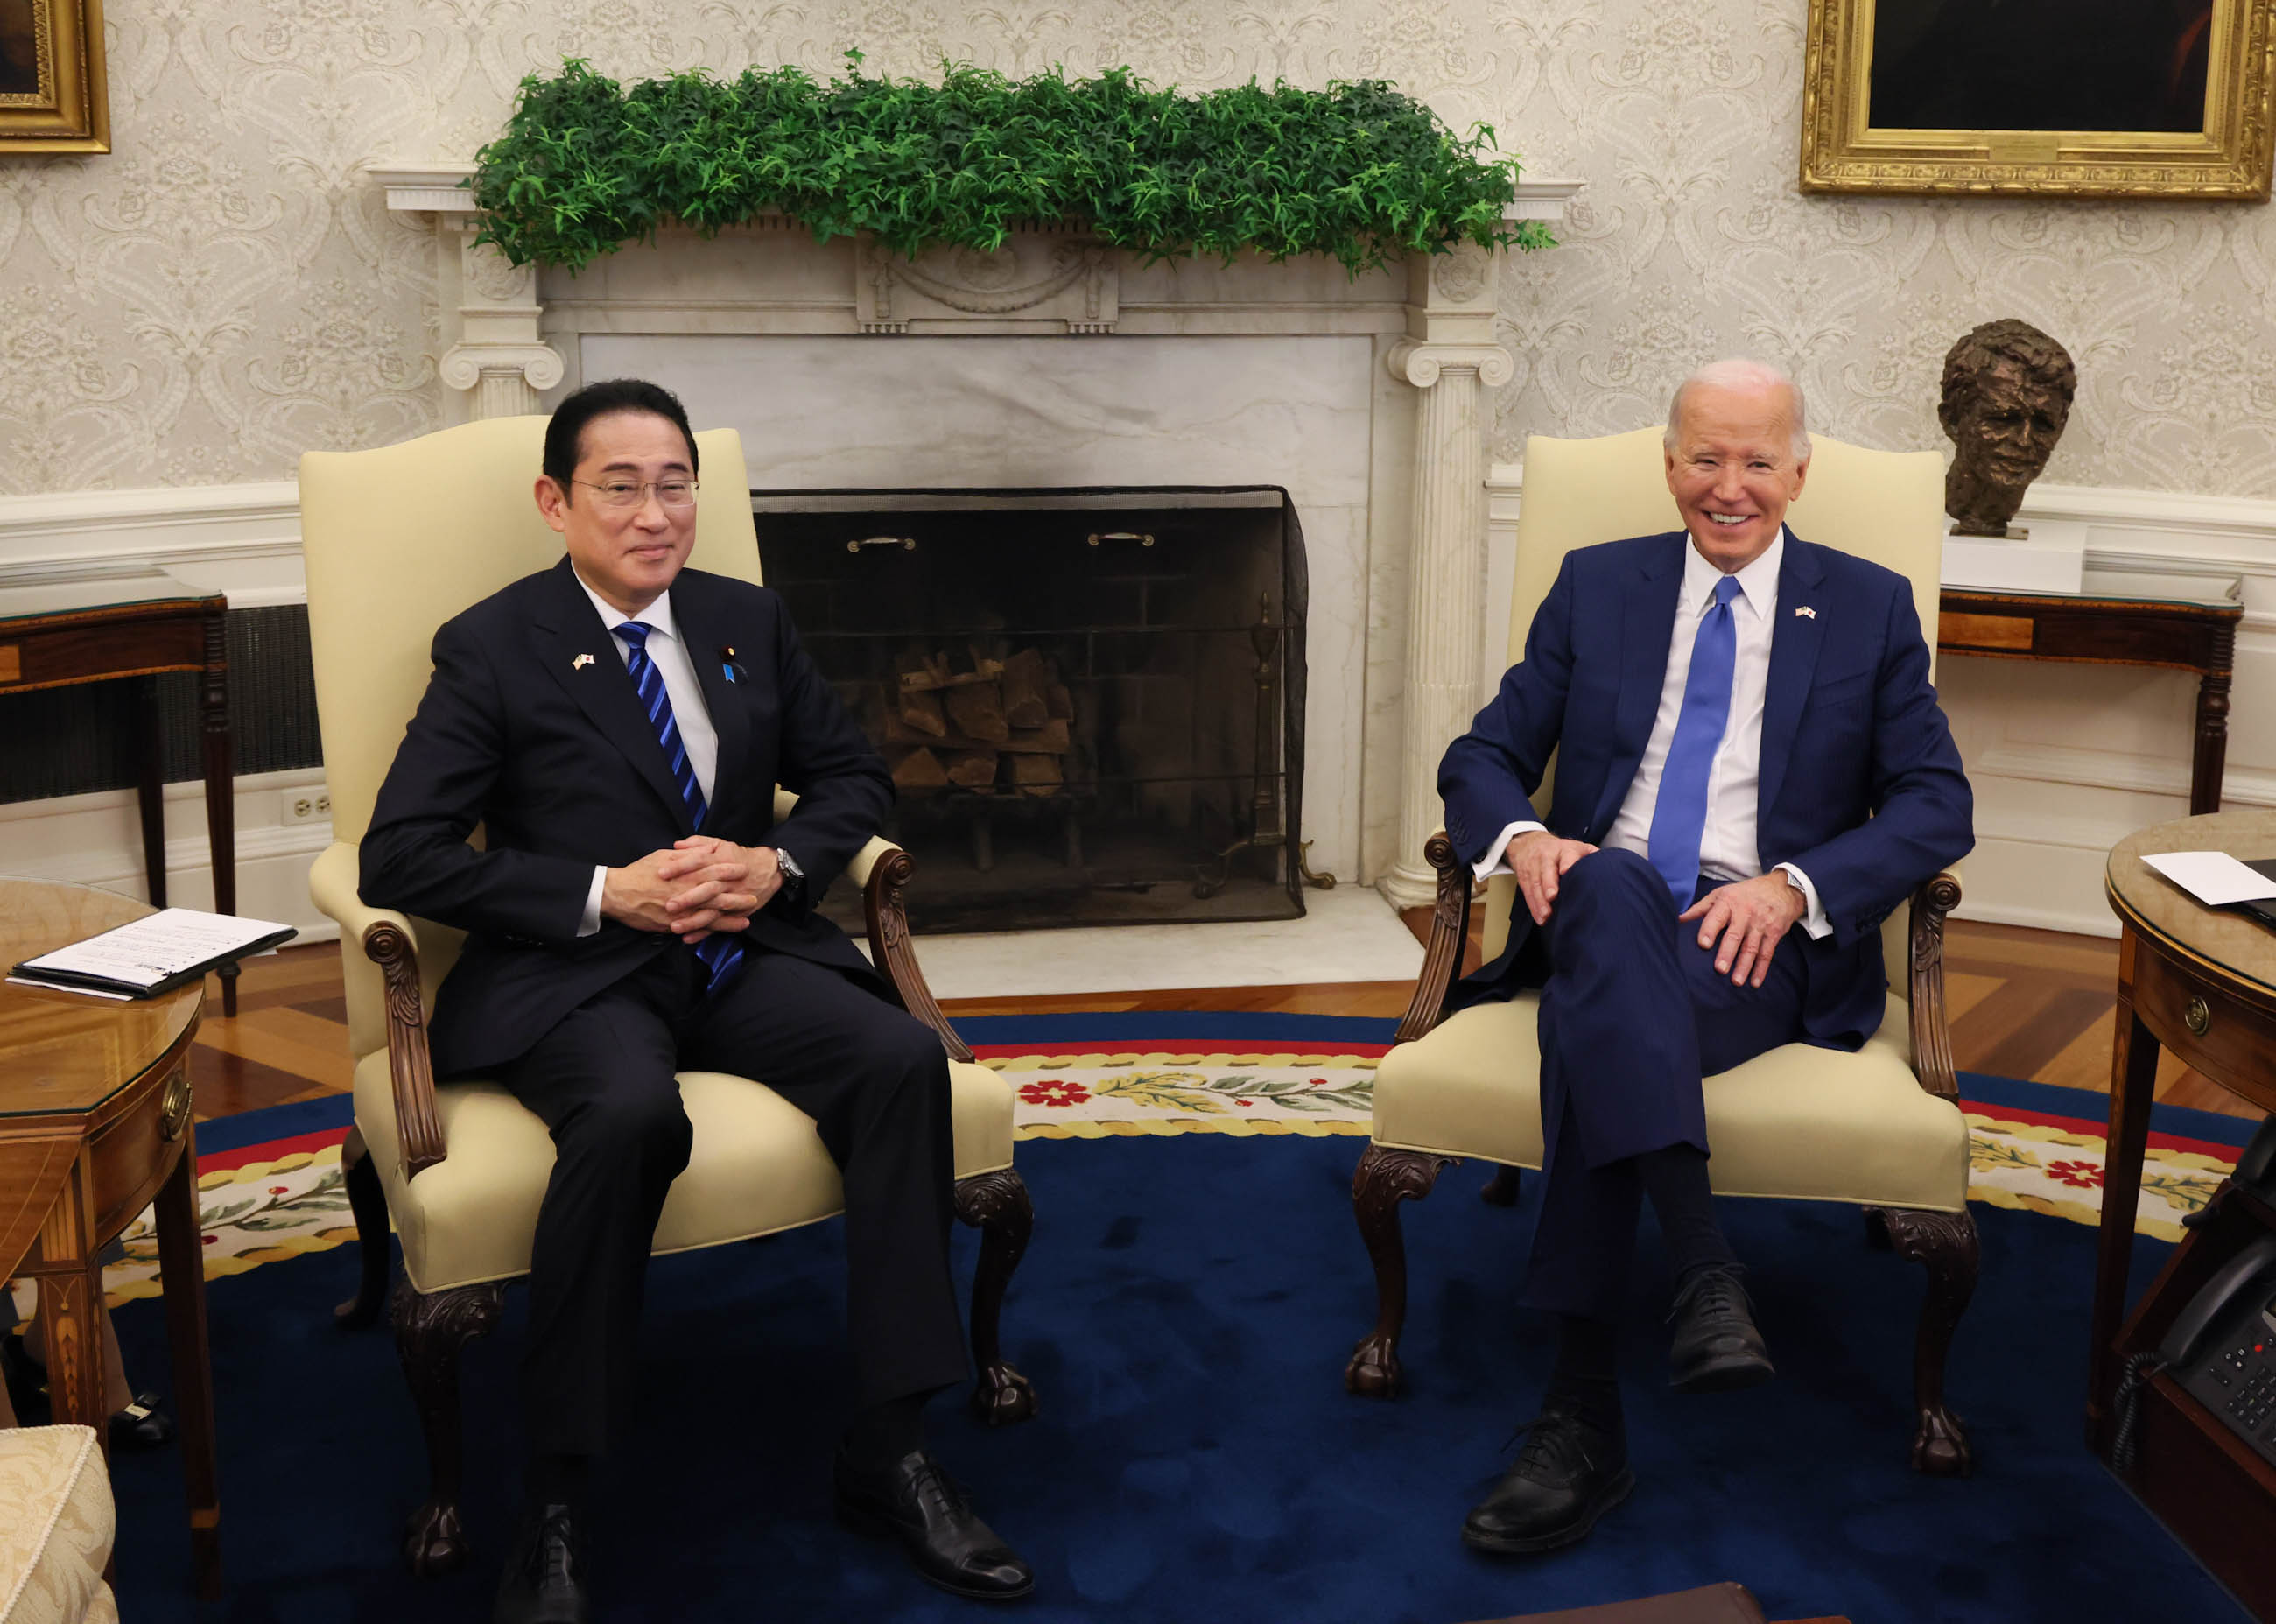 Japan-U.S. Summit Meeting